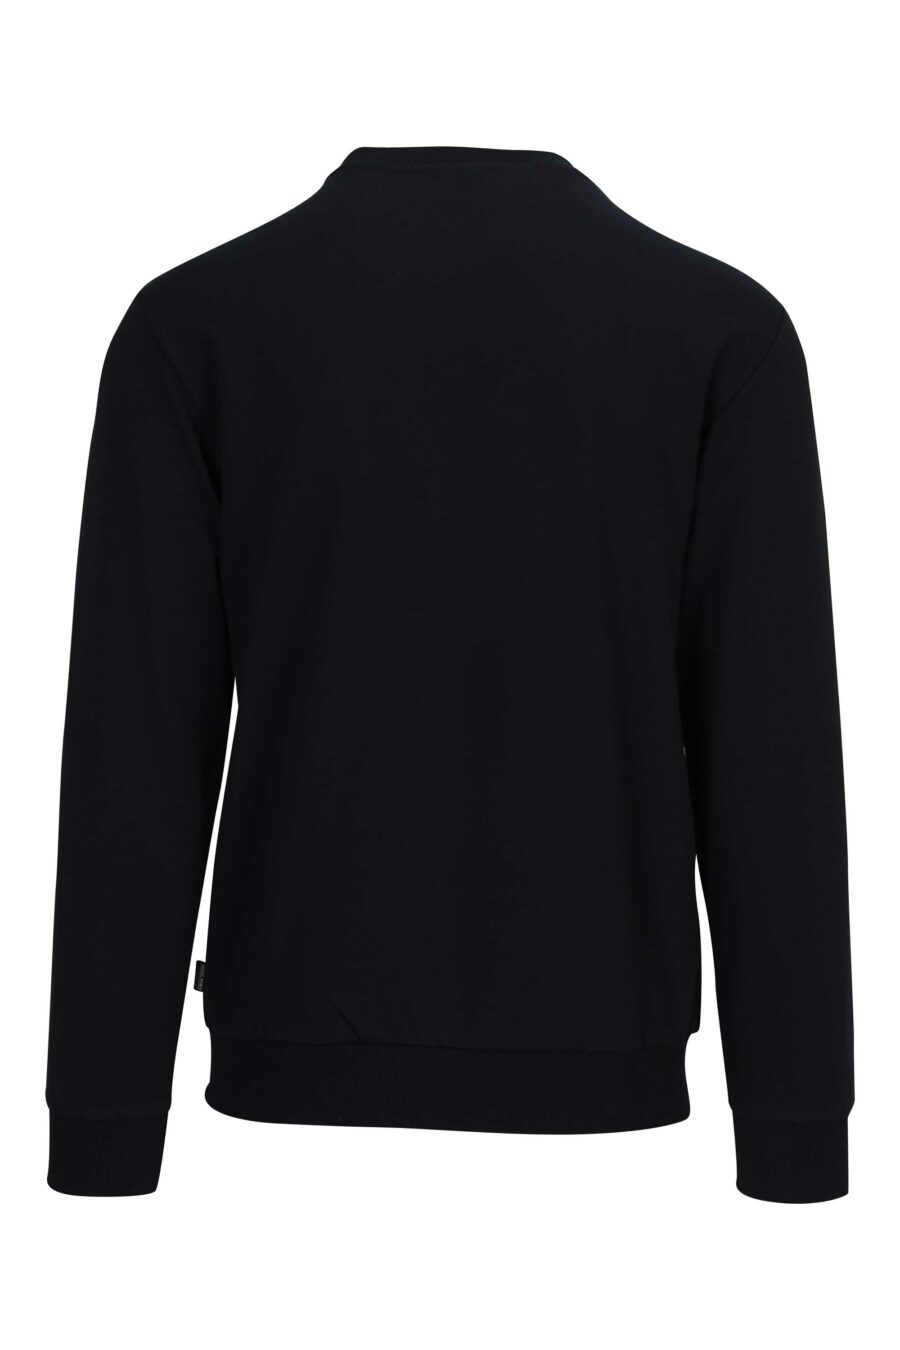 Black sweatshirt with "underbear" bear logo patch - 667113012964 1